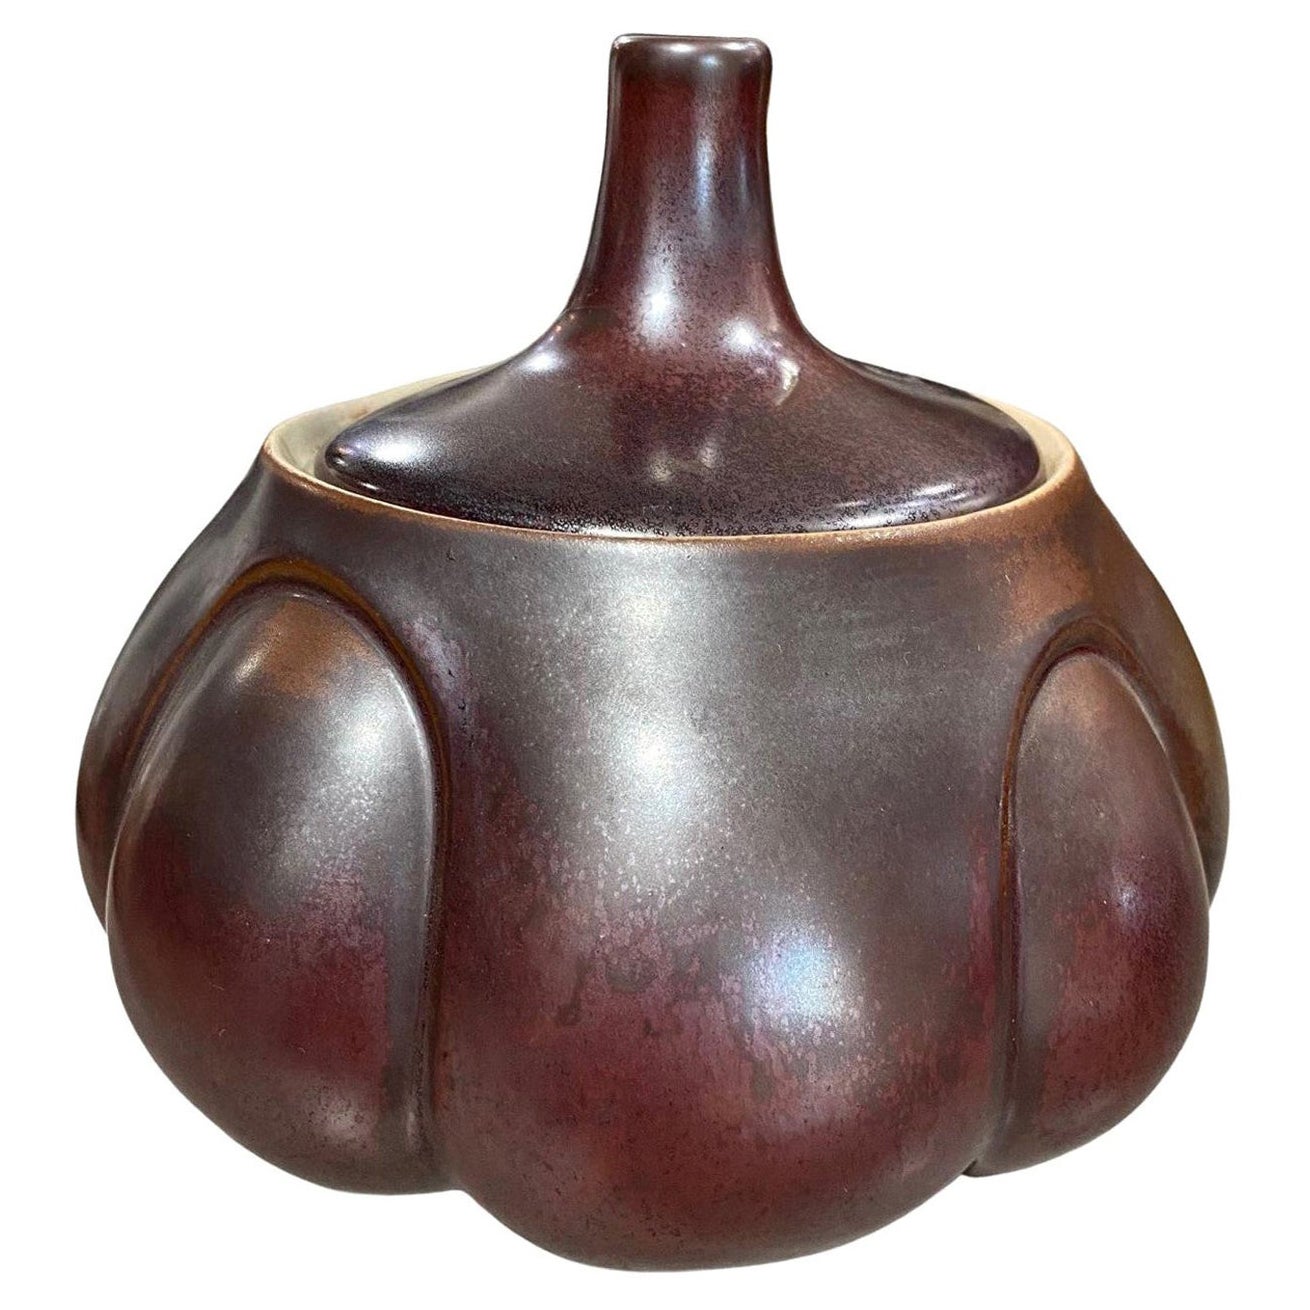 Laura Andreson Signed Glazed Midcentury California Studio Pottery Vessel Pot